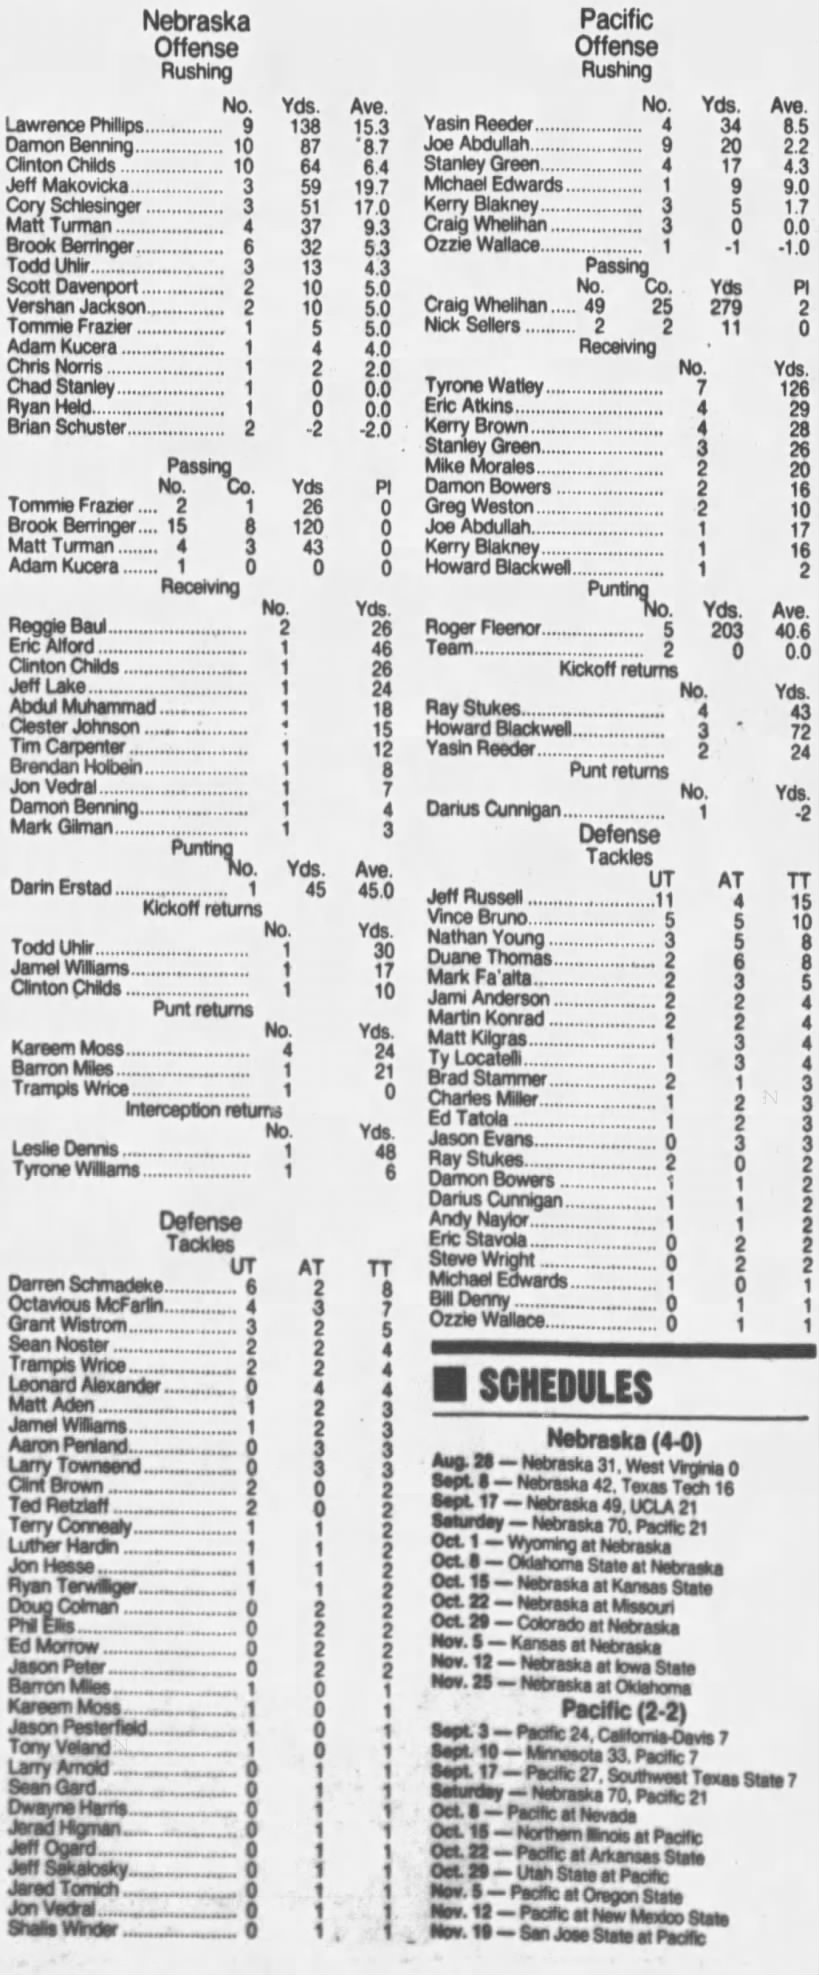 1994 Nebraska-Pacific game stats